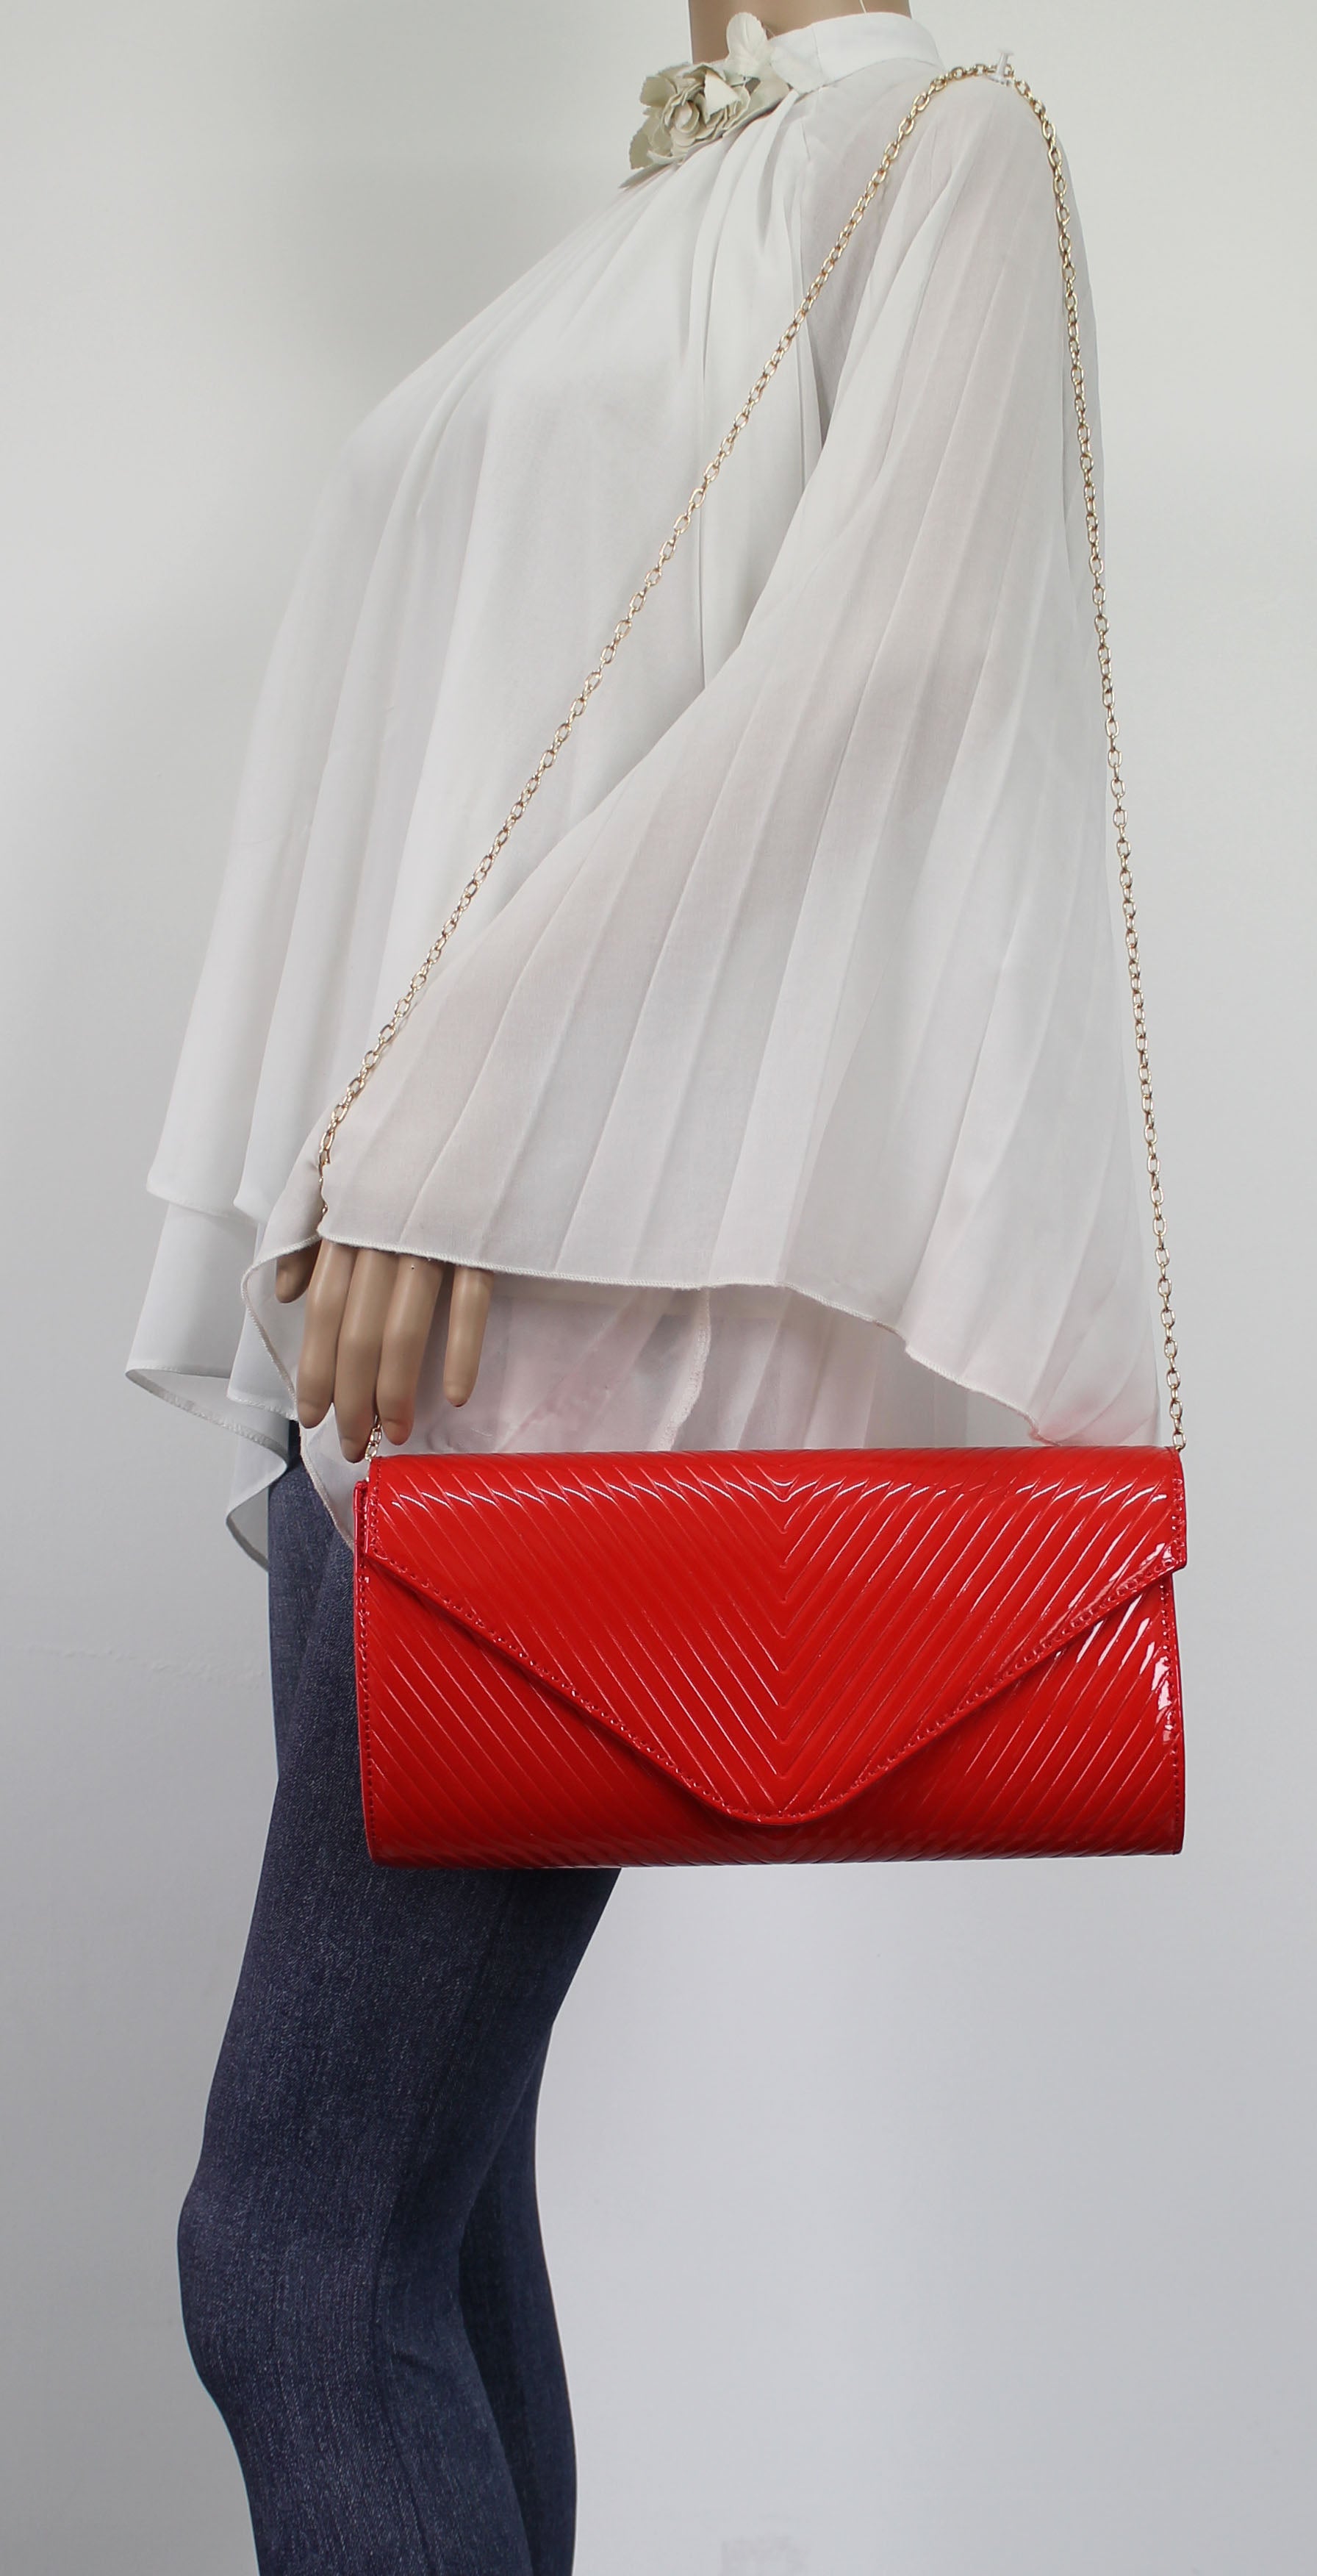 SWANKYSWANS Vanesa Clutch Bag Red Cute Cheap Clutch Bag For Weddings School and Work